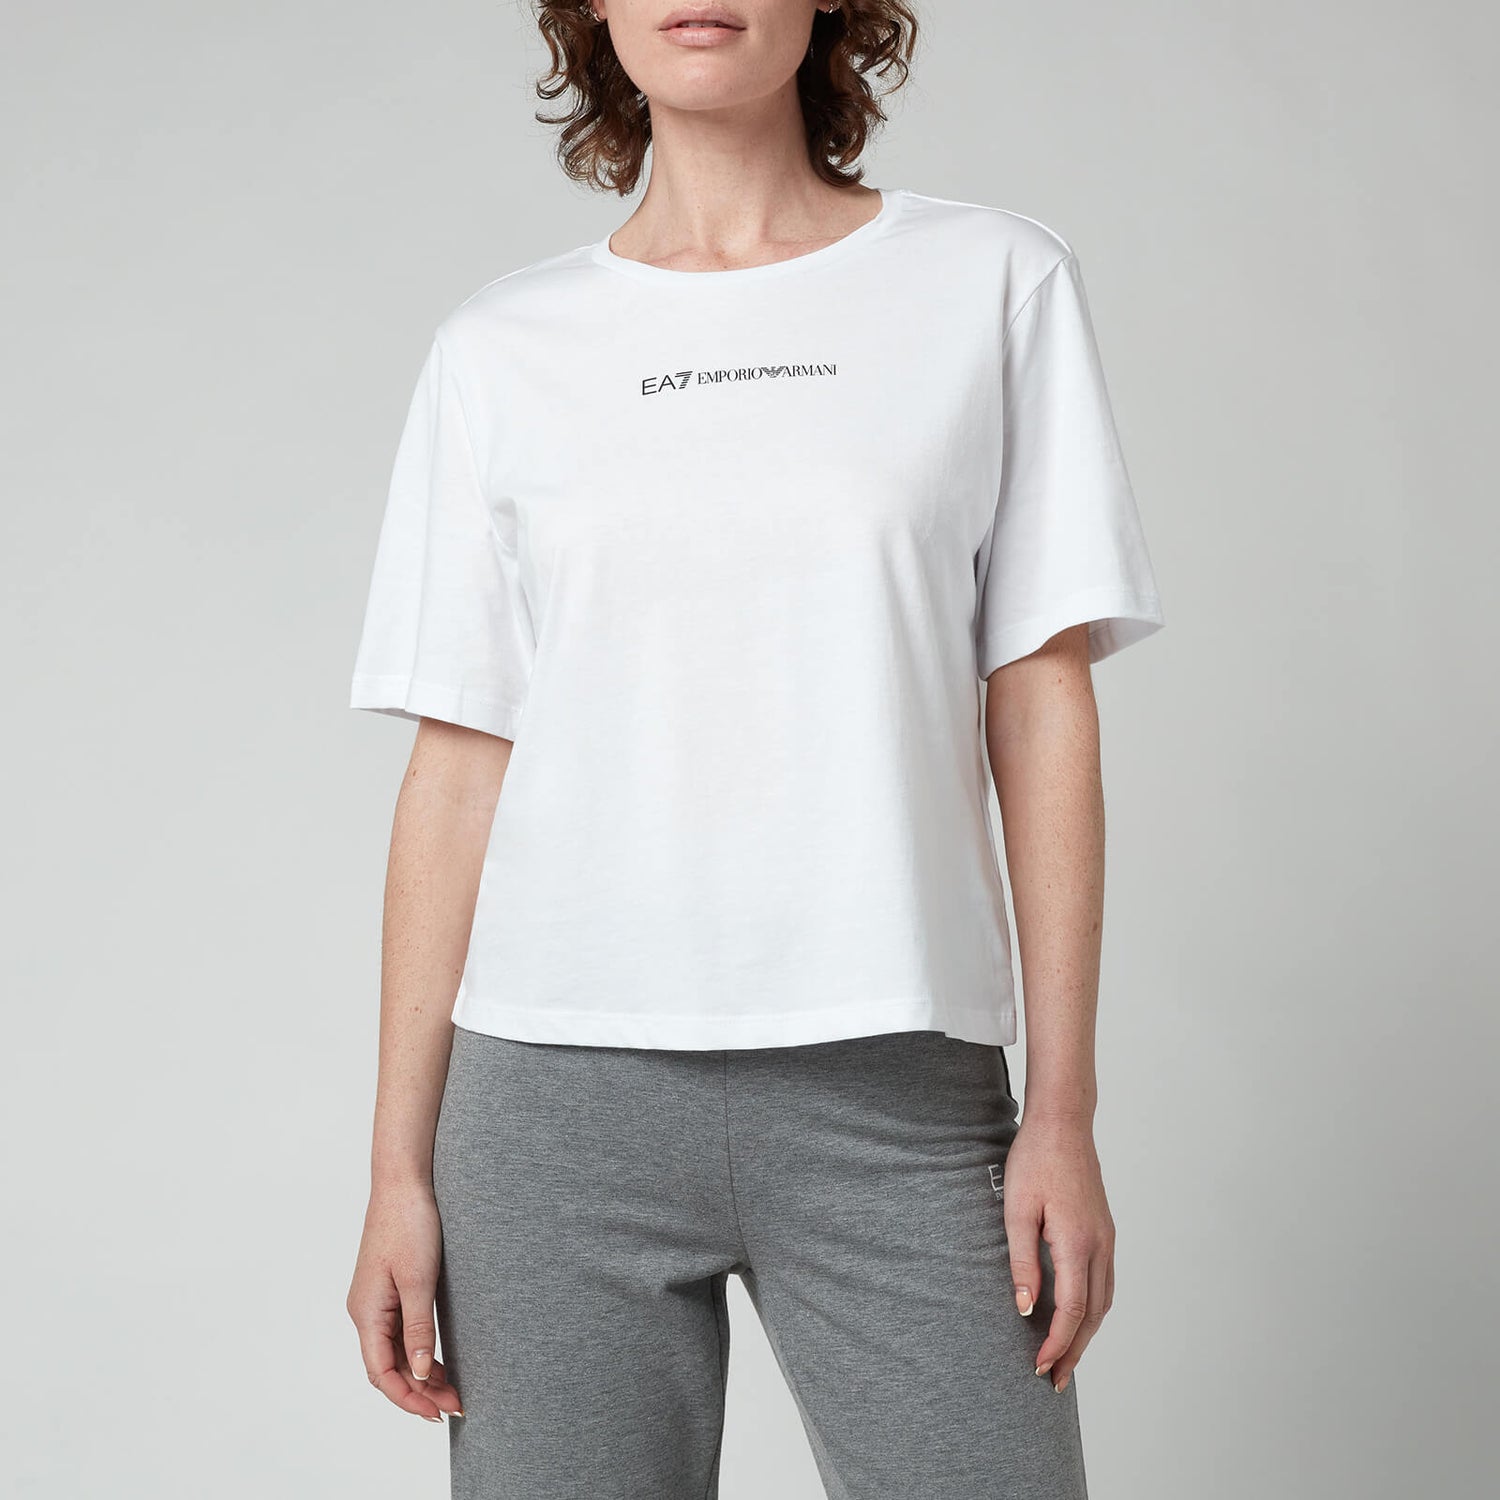 Emporio Armani EA7 Women's Train Logo Series Cross Over T-Shirt - White